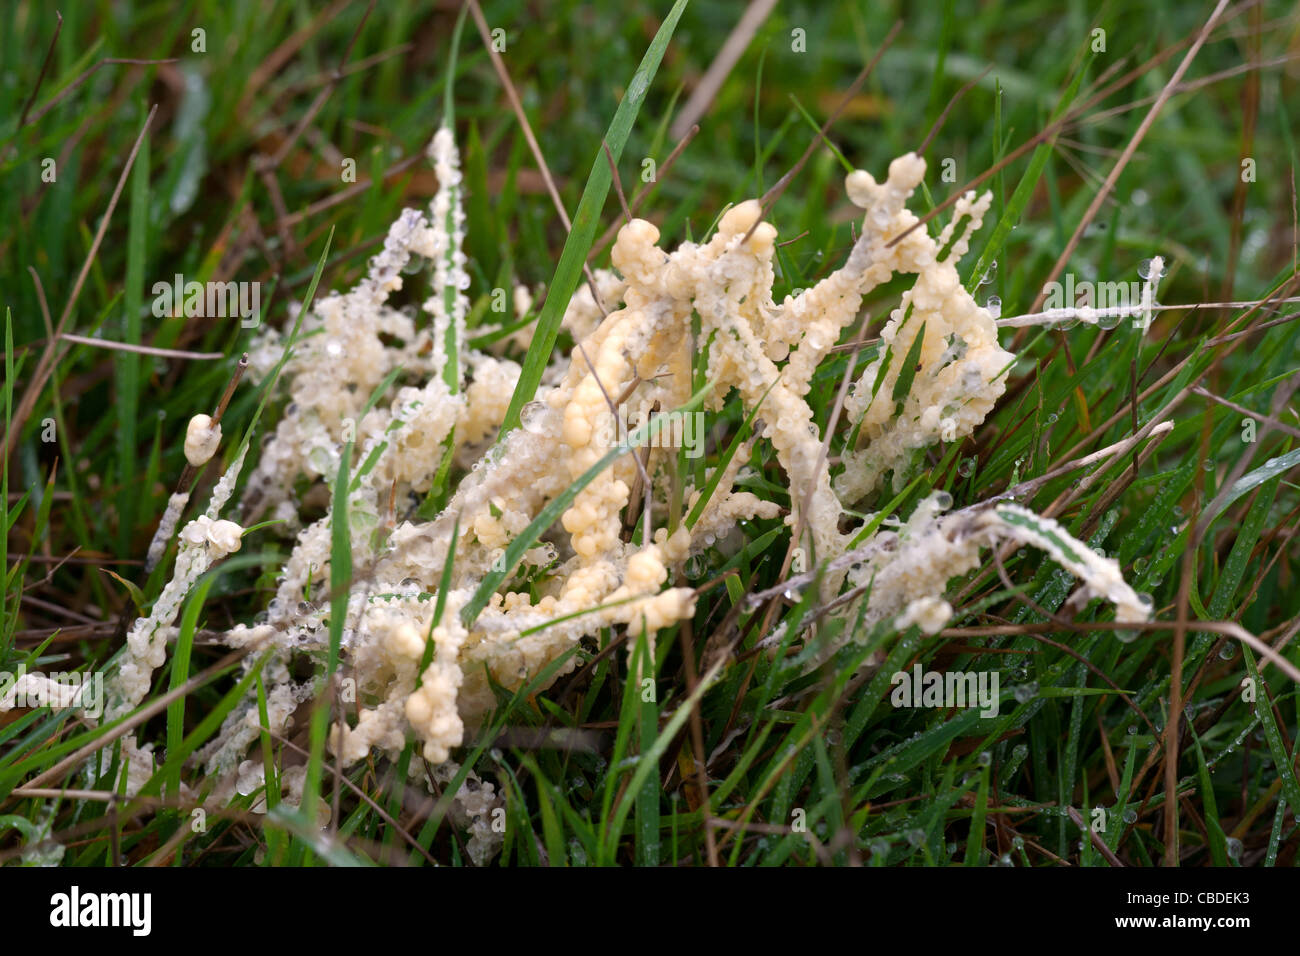 Slime Mold Mucilago crustacea growing on grass Stock Photo